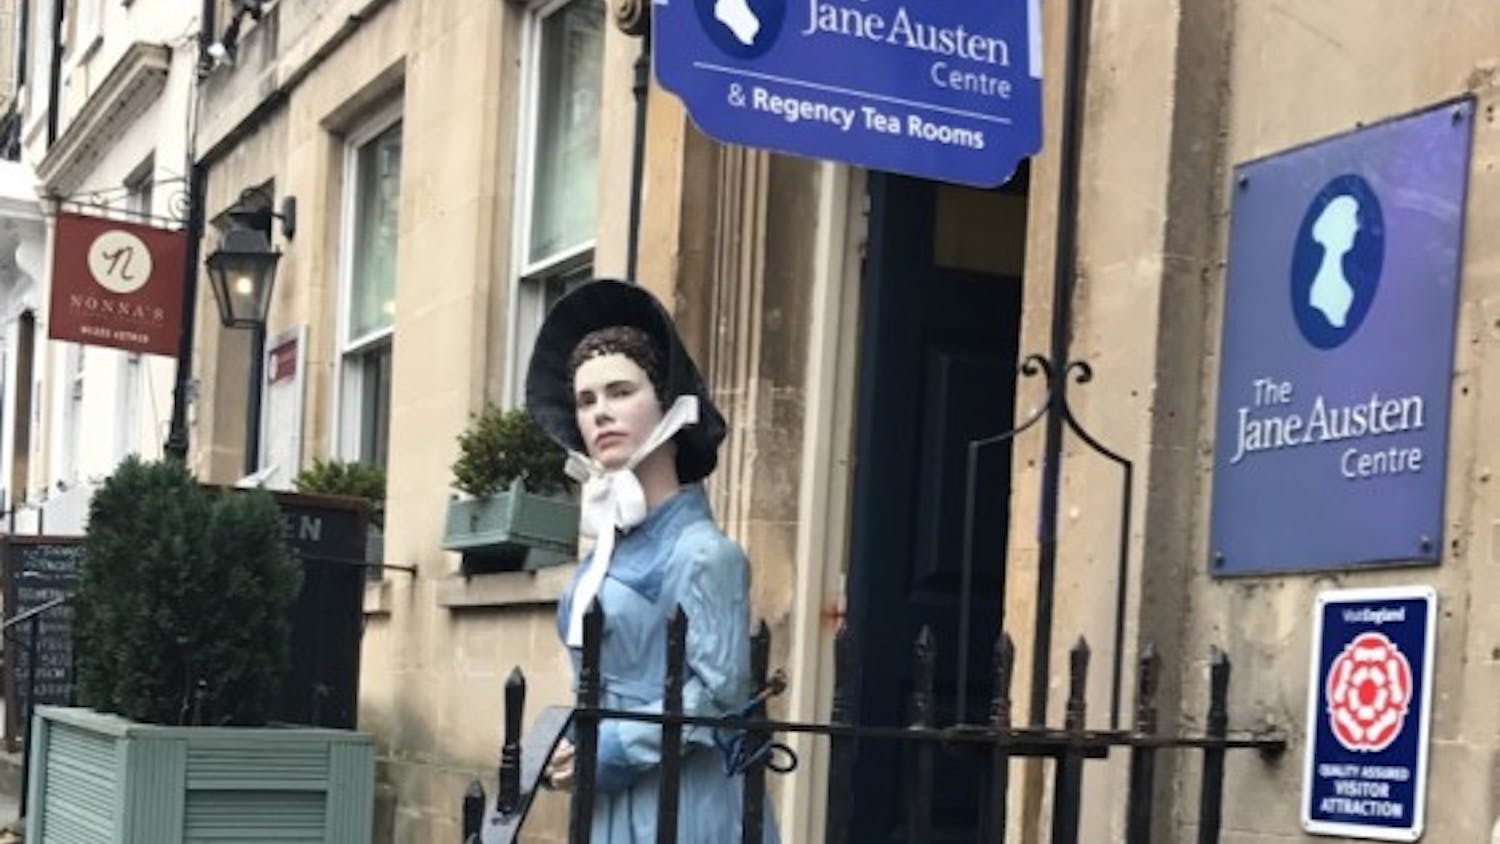 Outside of the Jane Austen Centre.